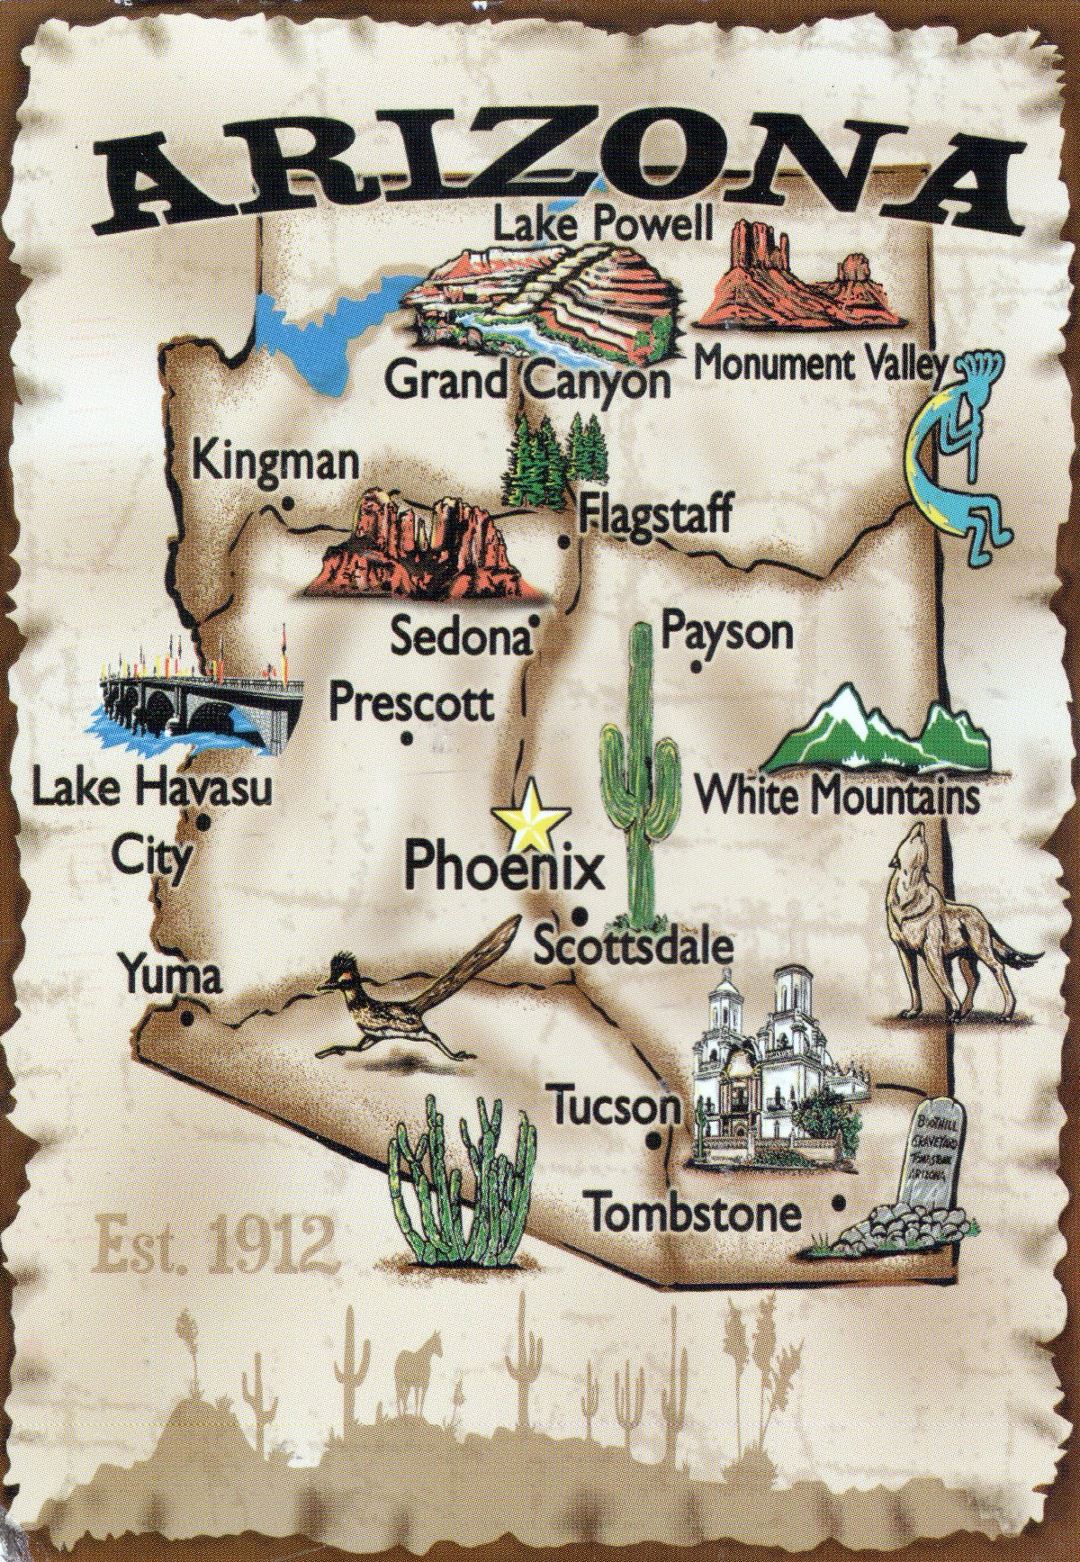 Travel illustrated map of Arizona state